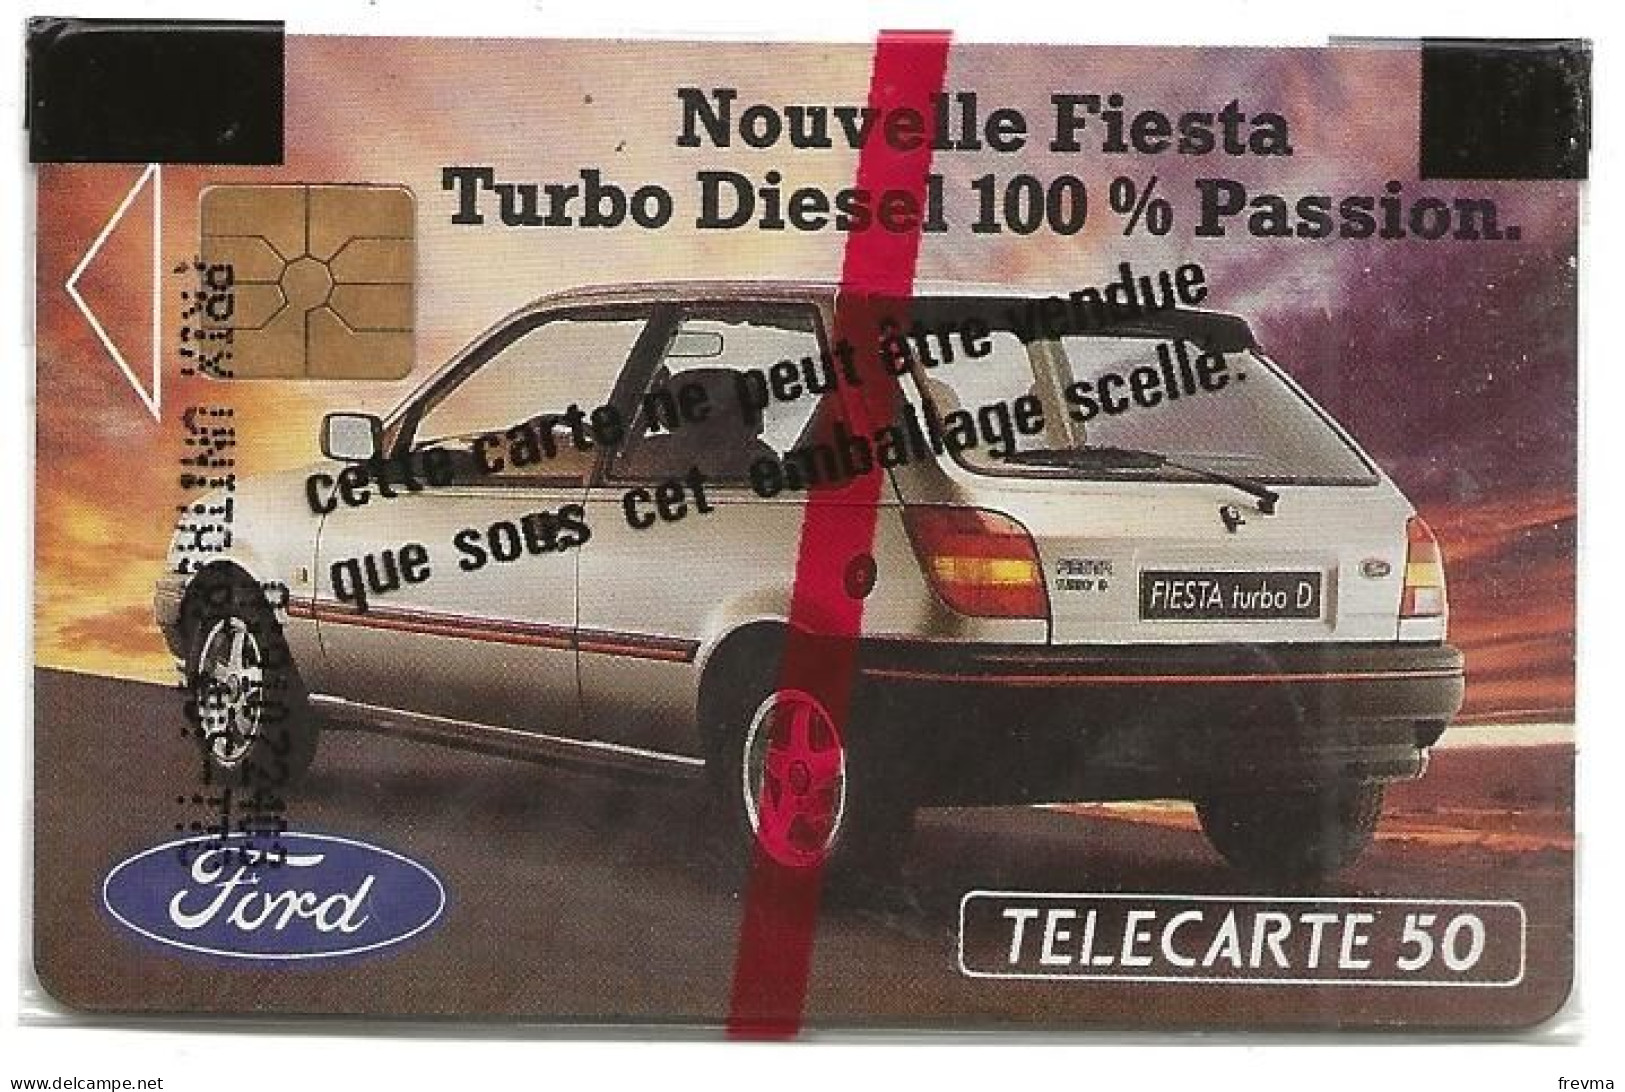 Telecarte F164 NBS 50 Unités GEM - 1991